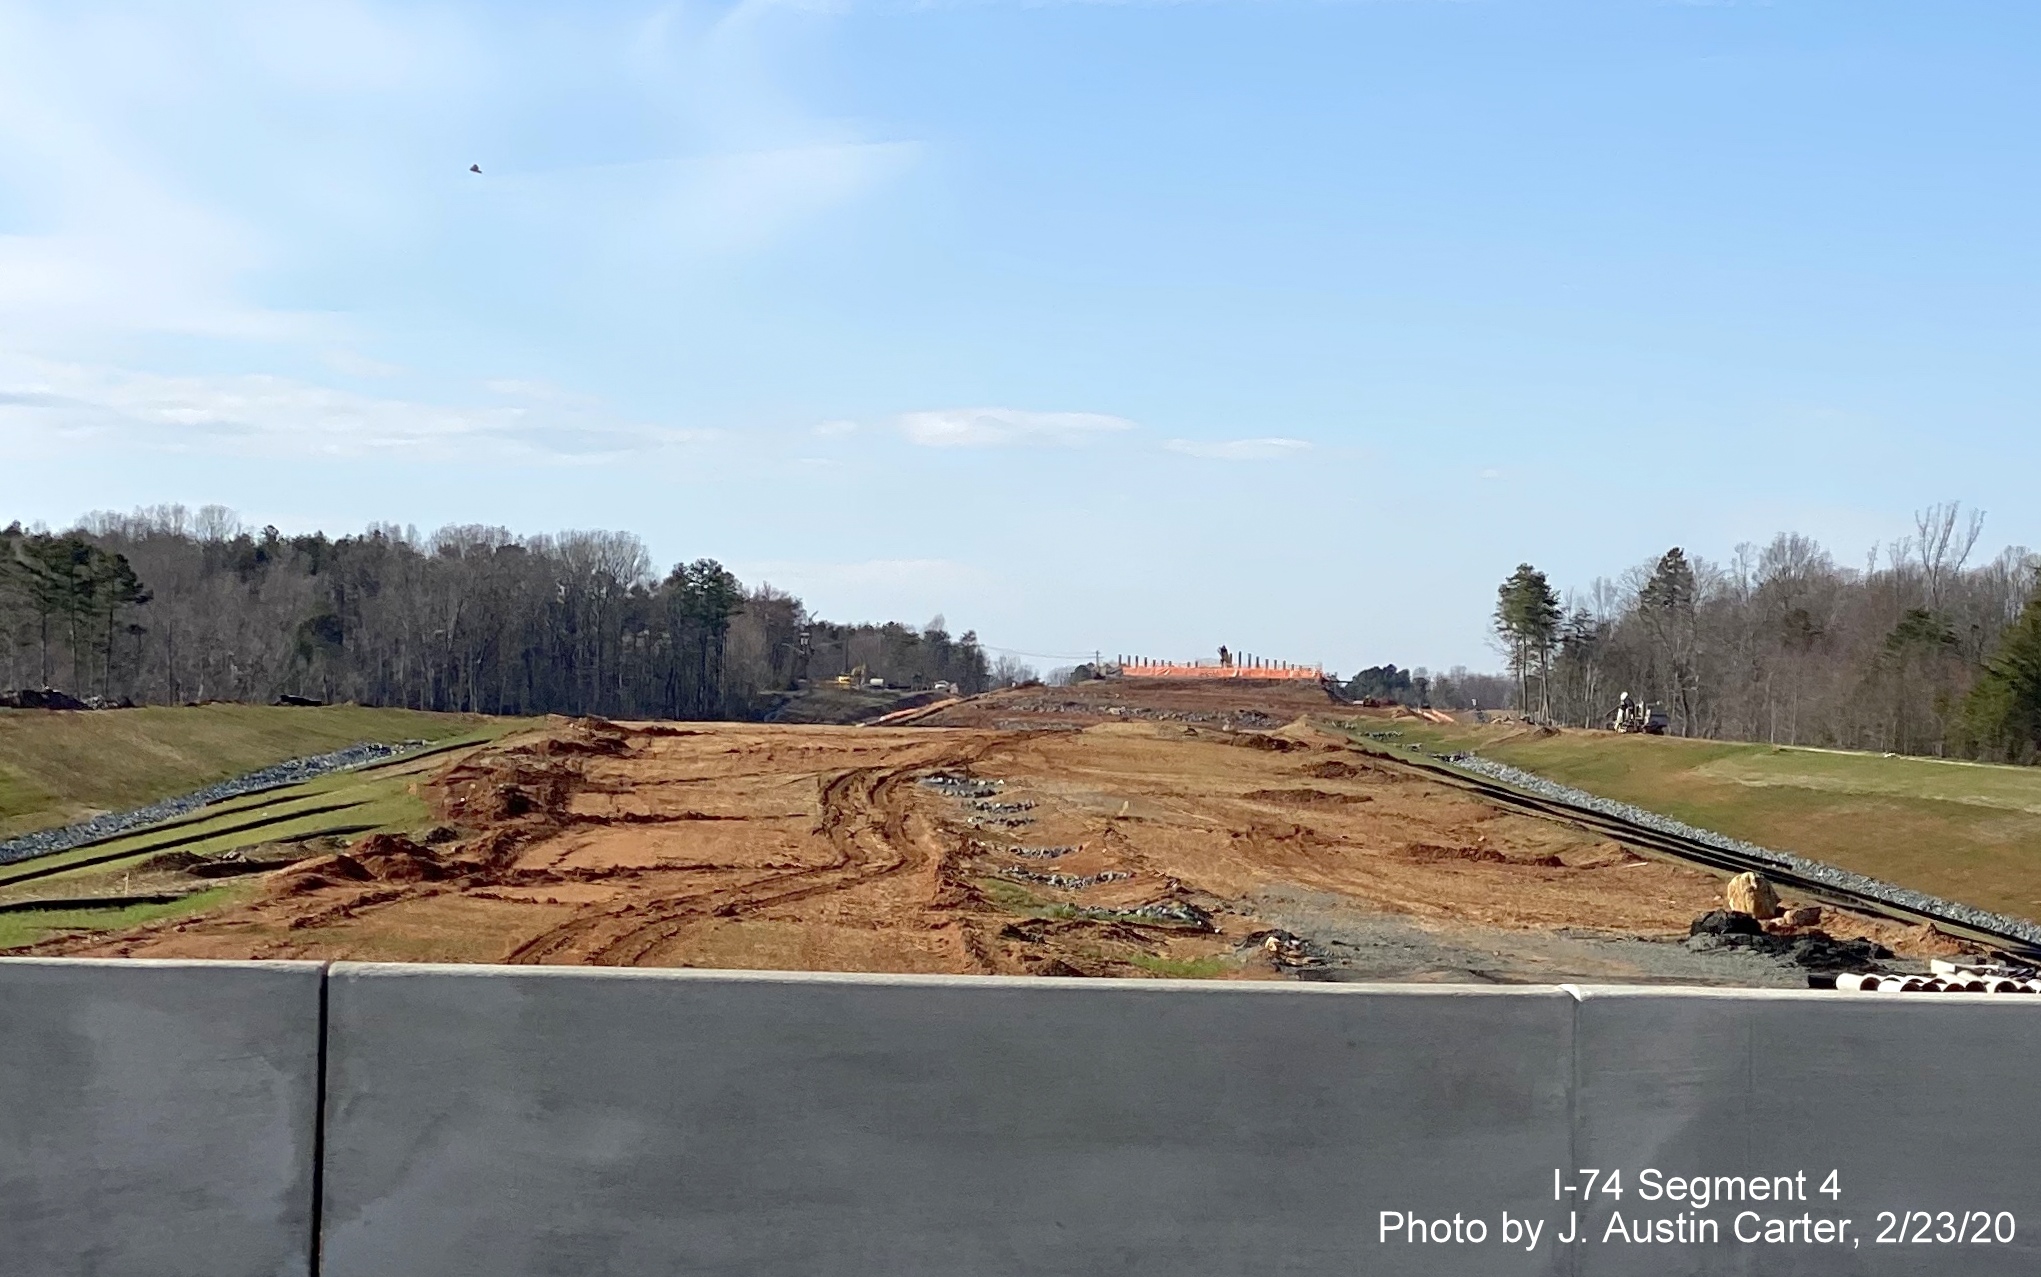 Image of road construction of future I-74/Winston-Salem Beltway looking west toward
        Old Walkertown Road, by J. Austin Carter in Feb. 2020